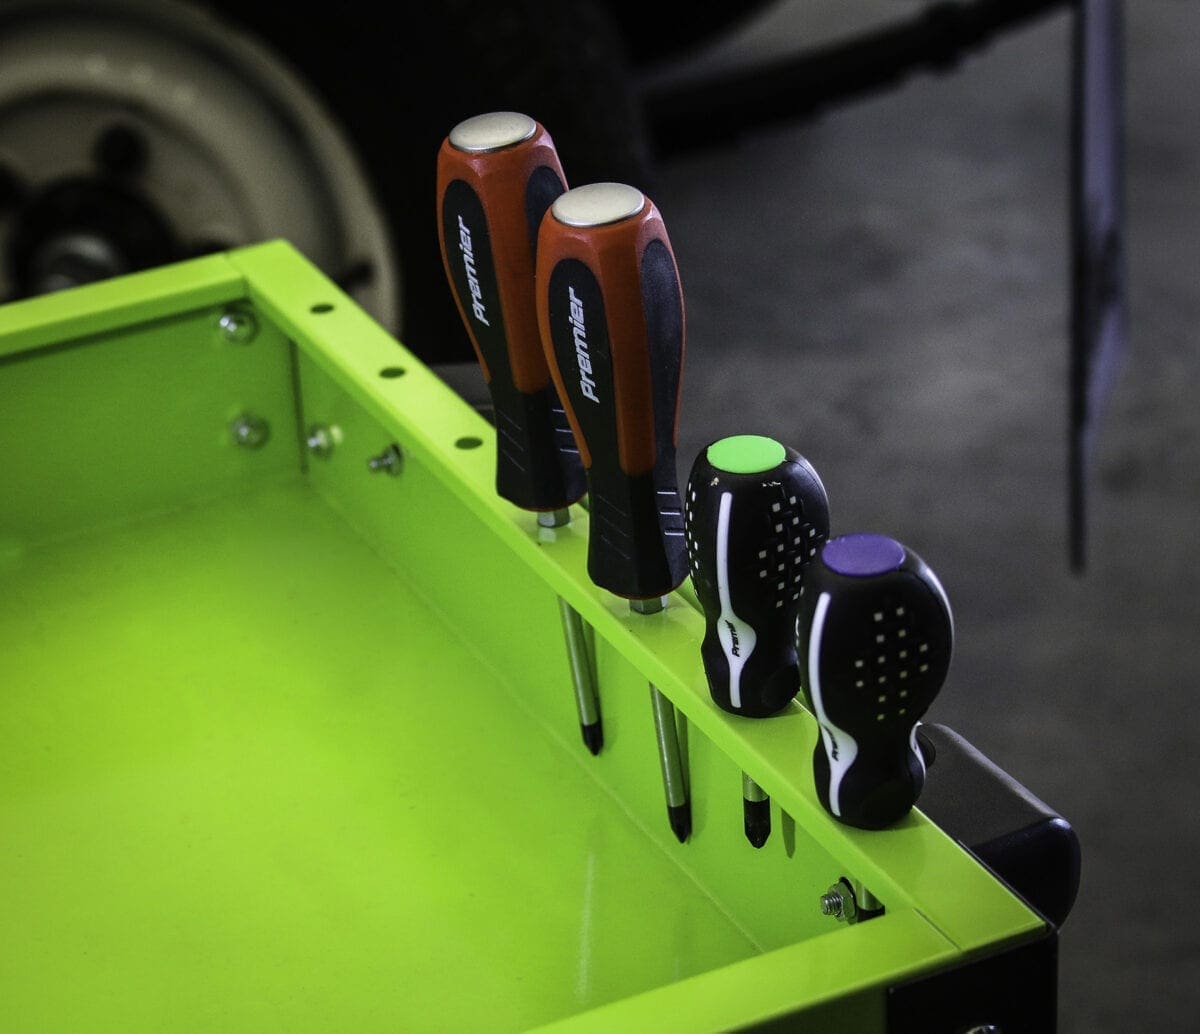 Sealey launches new range of Hi-Vis workshop trolleys – look mint!